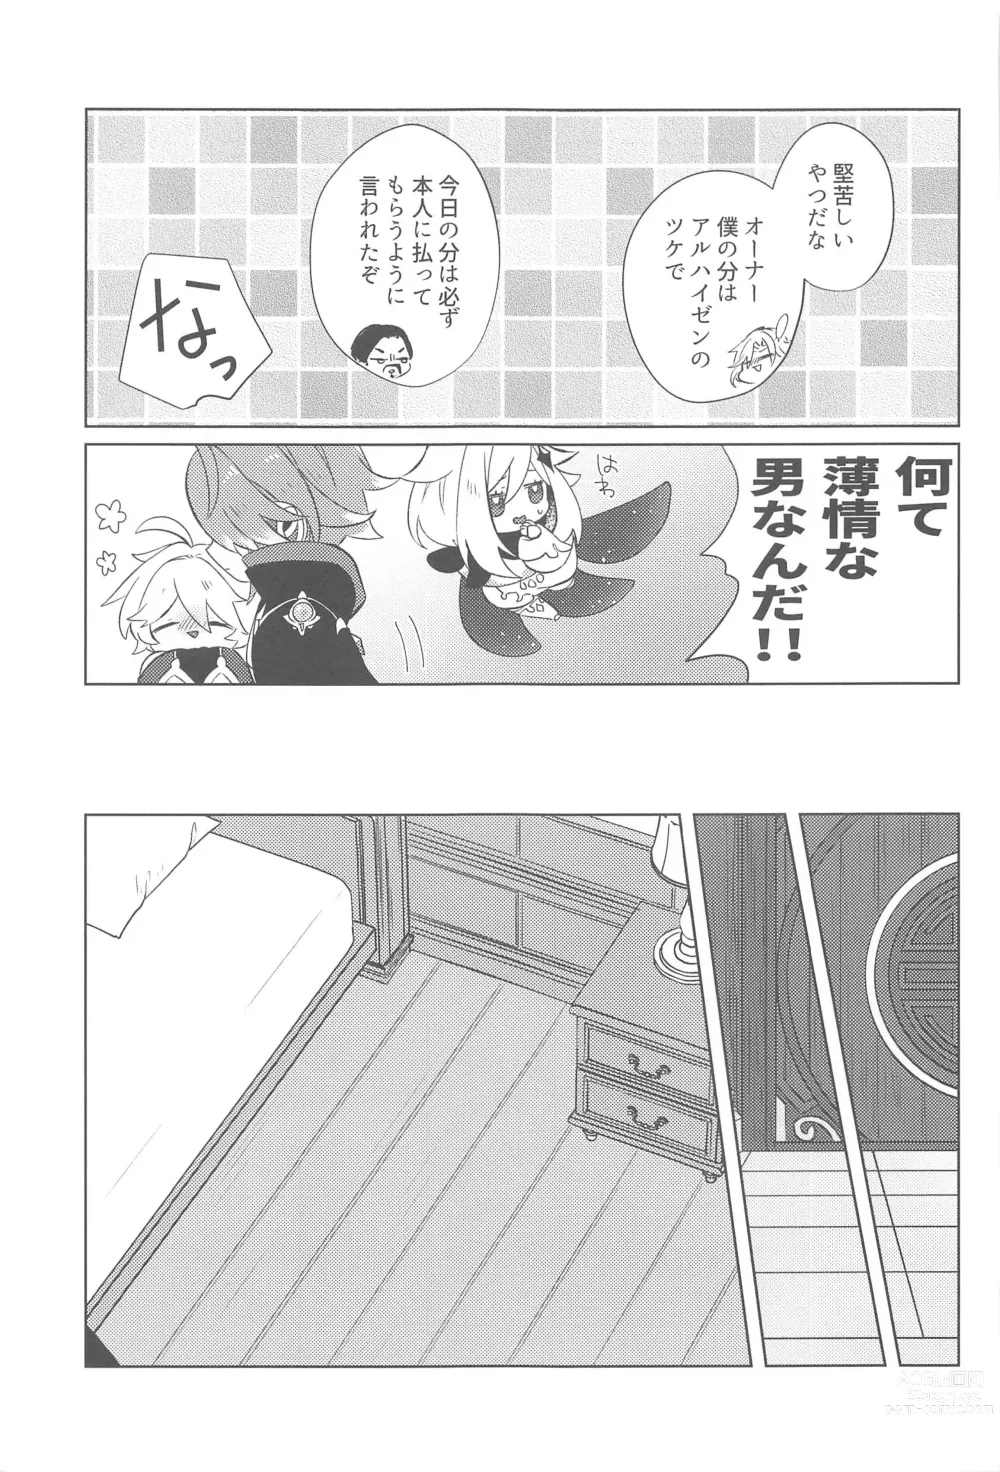 Page 10 of doujinshi LIQUID COURAGE